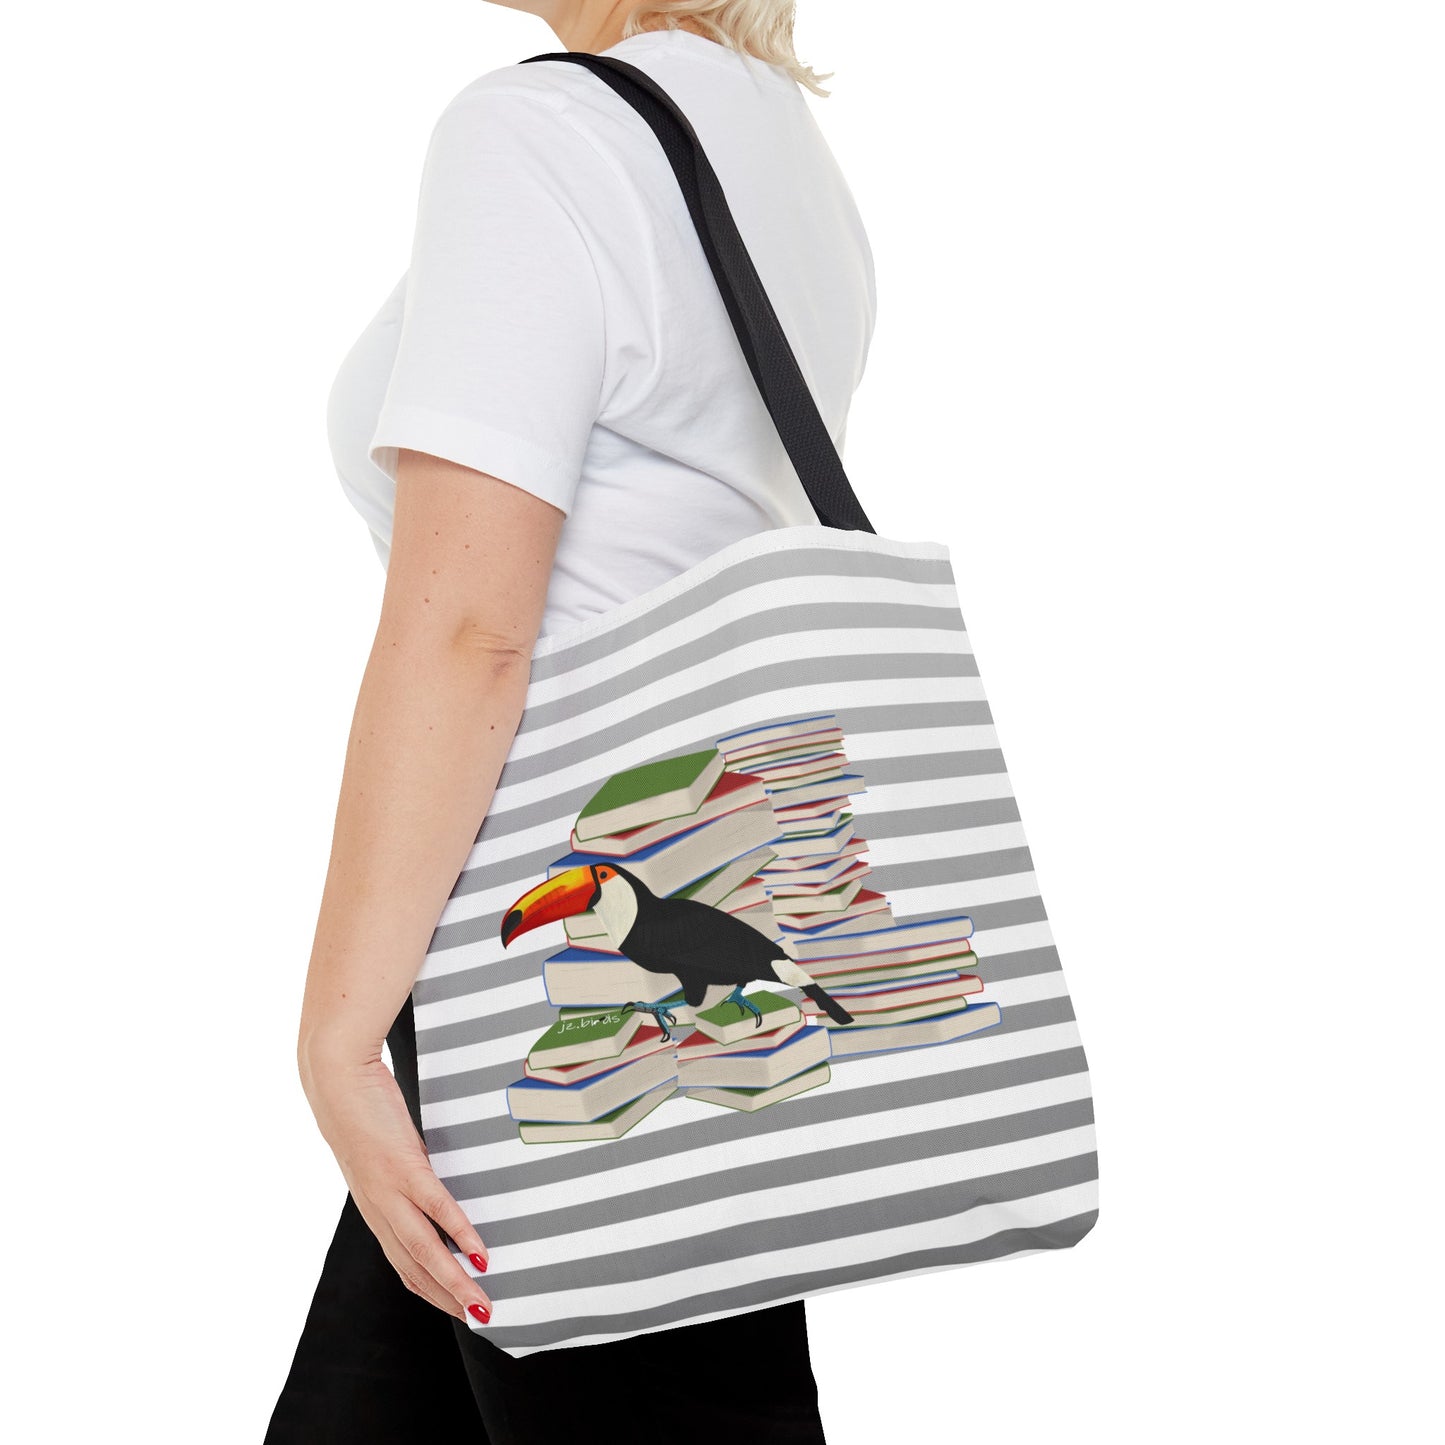 Toucan Bird and Books Birdlover Bookworm Tote Bag 16"x16"